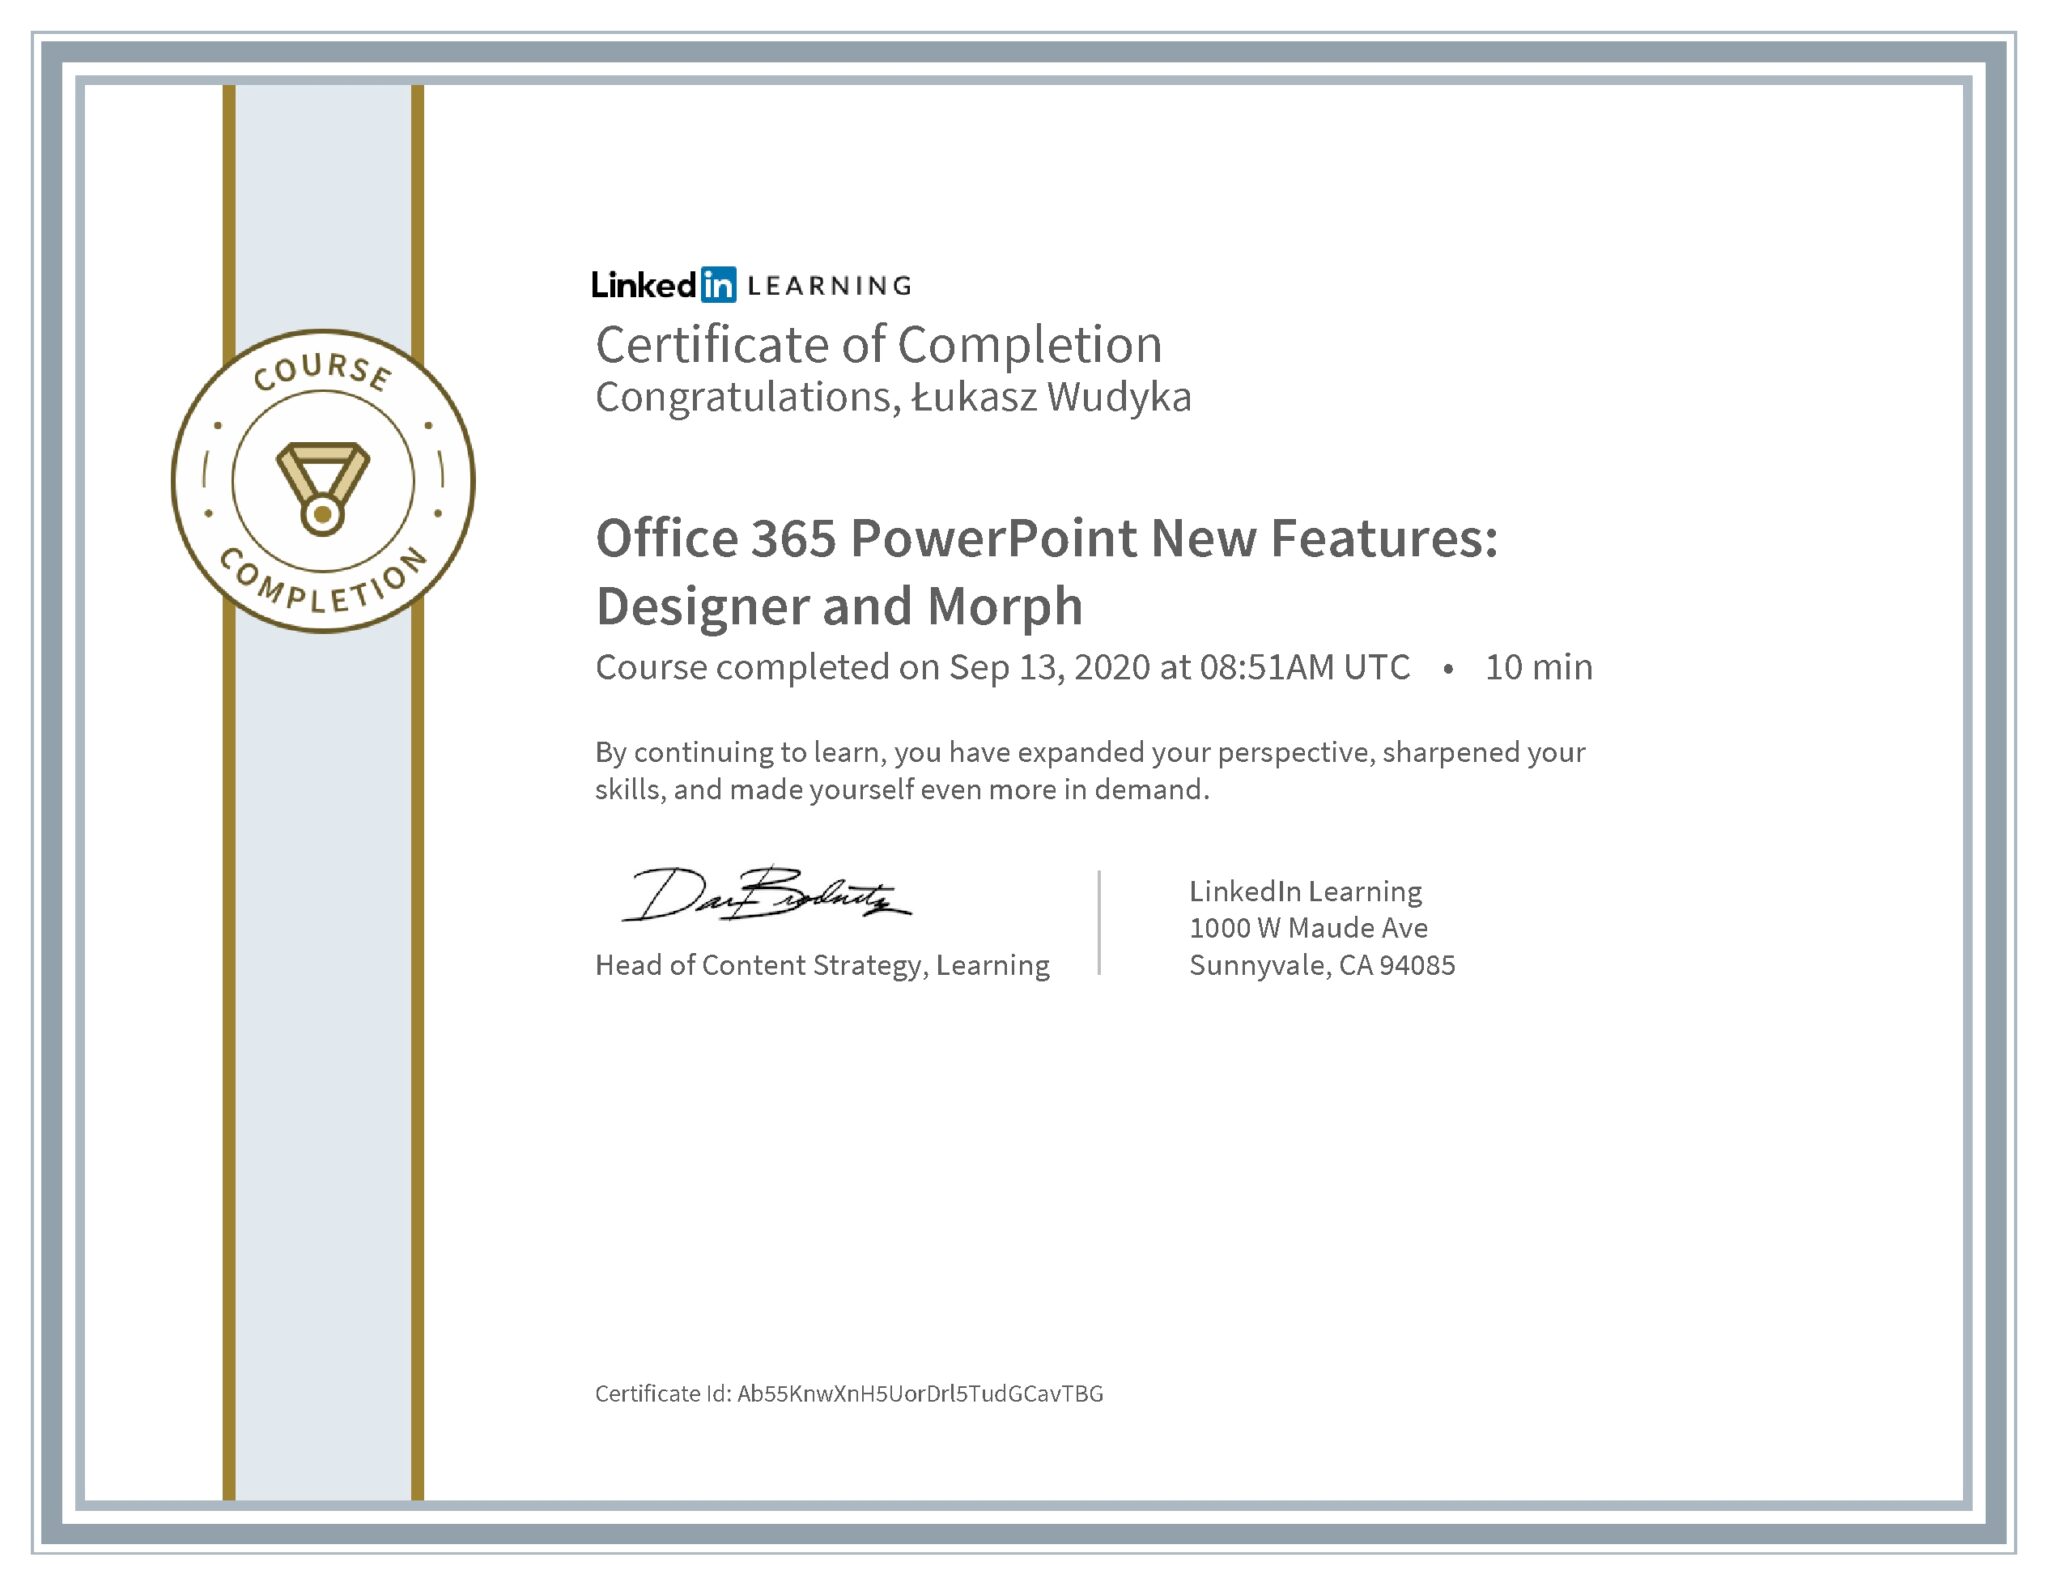 Łukasz Wudyka certyfikat LinkedIn Office 365 PowerPoint New Features: Designer and Morph